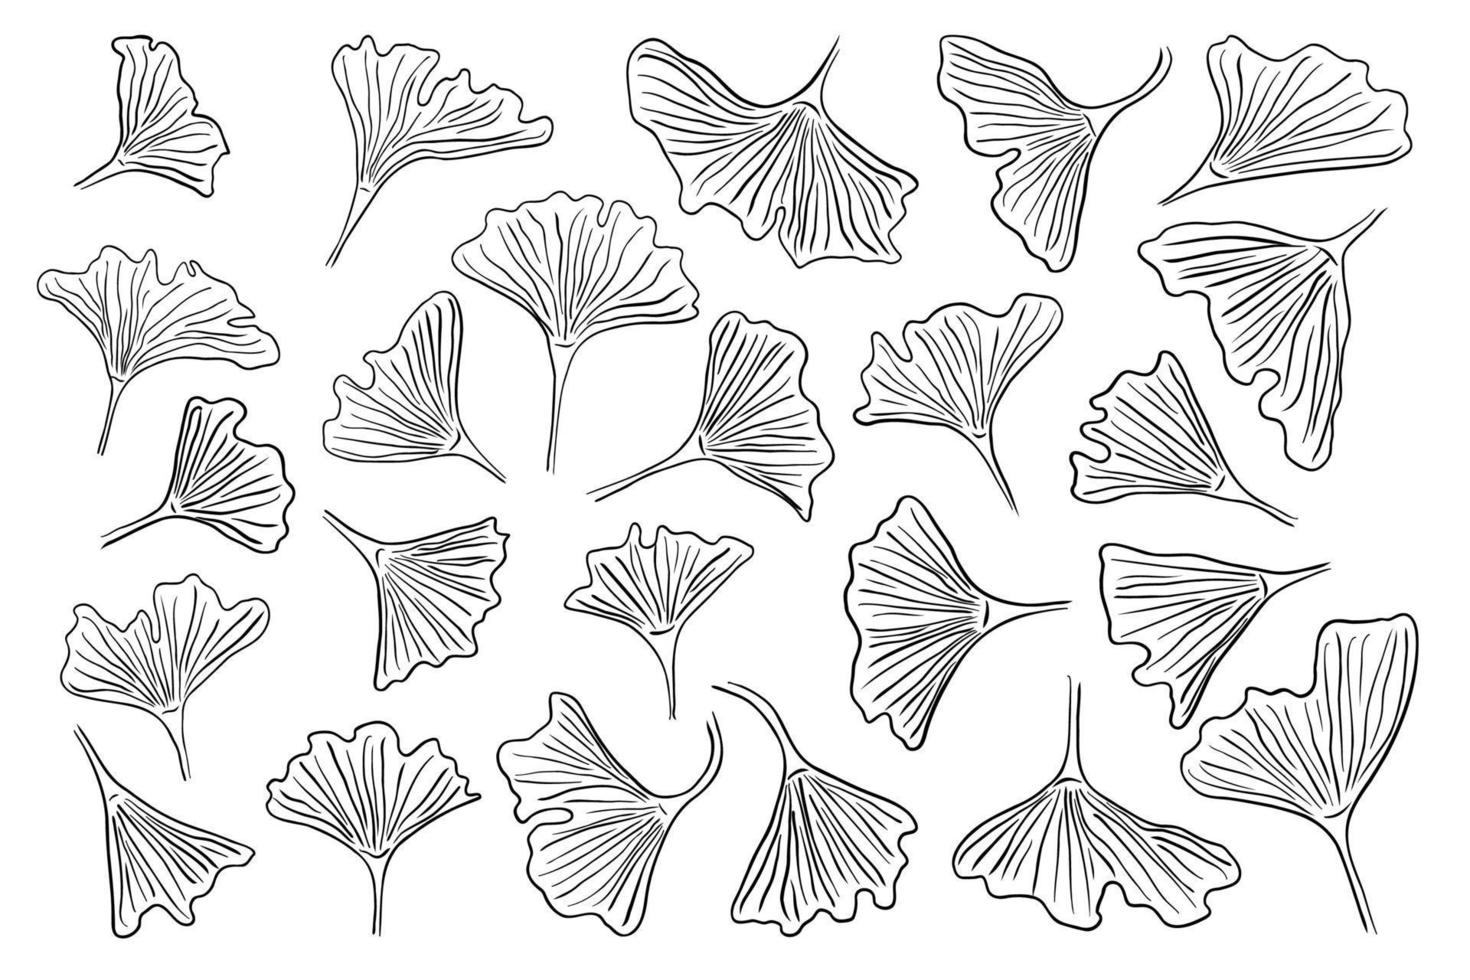 Ginkgo biloba hand drawn ink sketch set. Abstract jinkgo leaves. Botany vintage pen style collection for decor. Vector illustration.